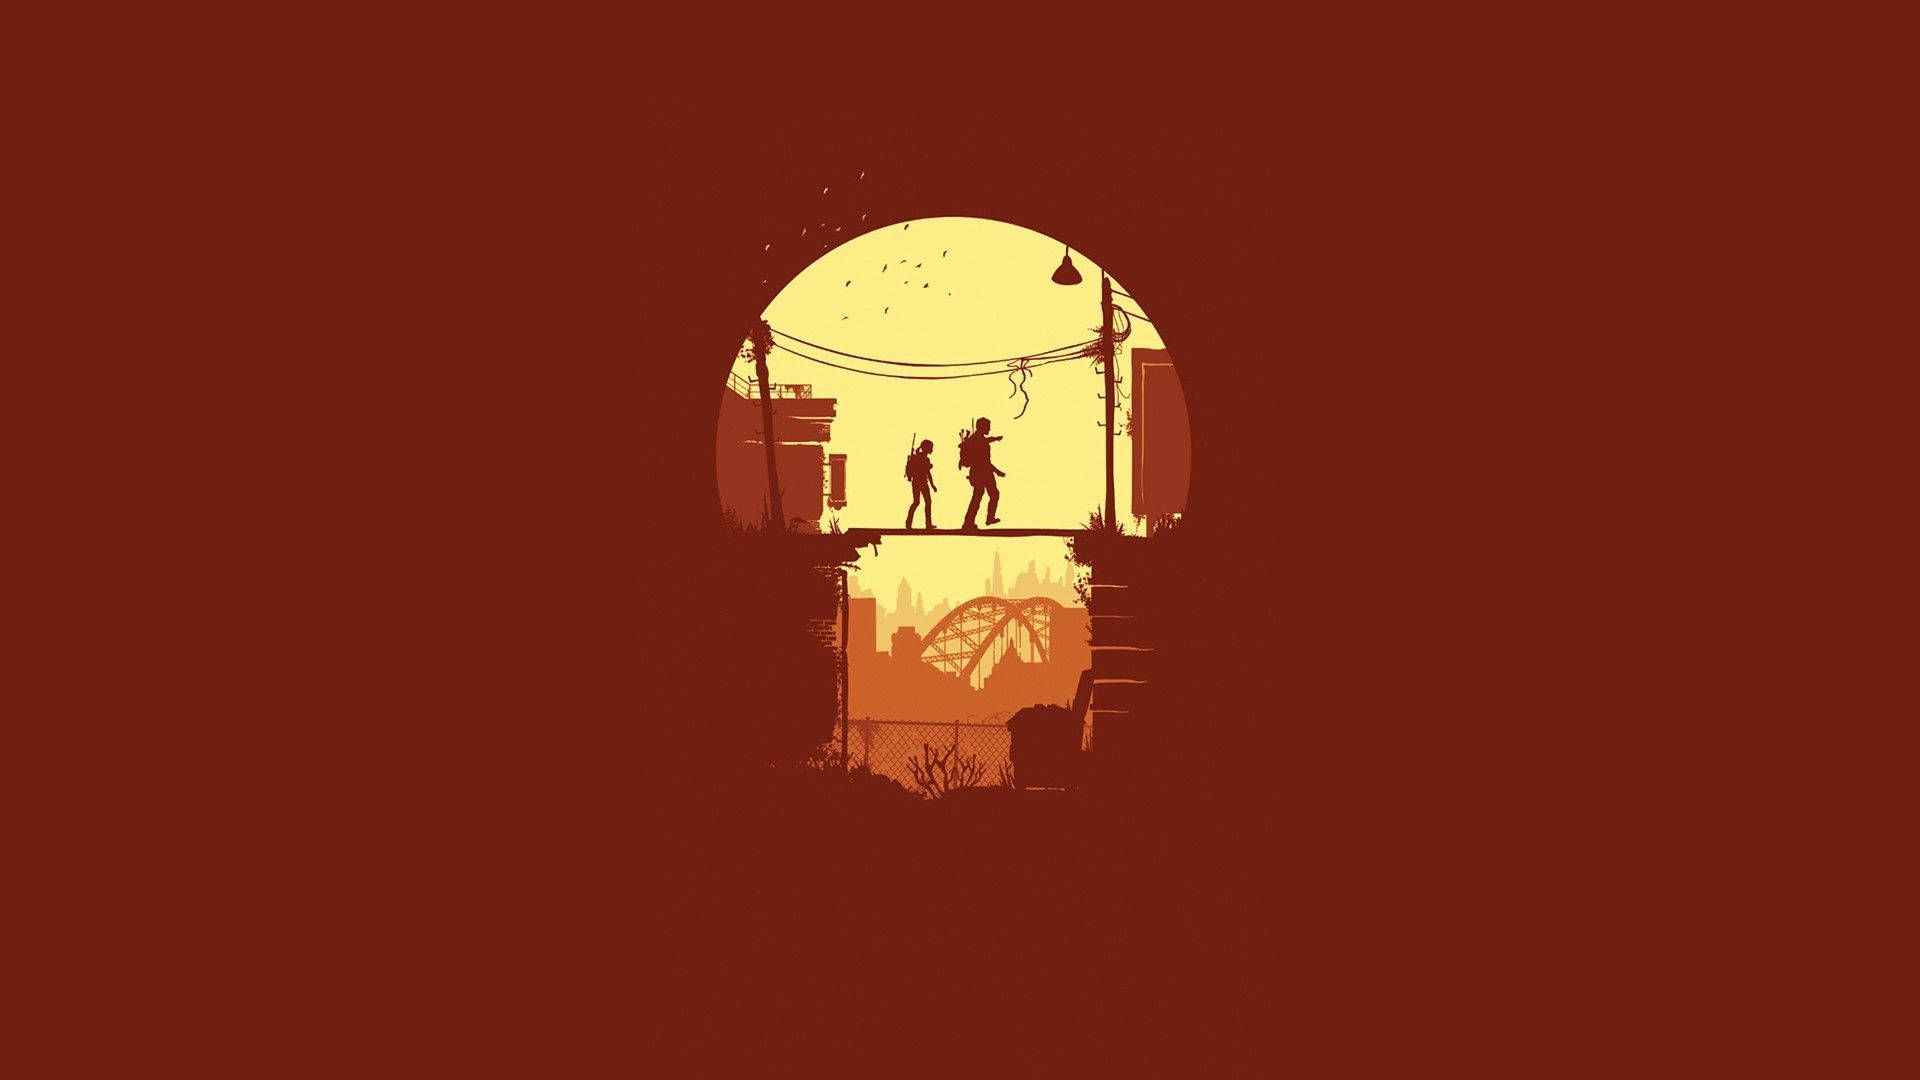  The Last Of Us Hintergrundbild 1920x1080. Free The Last Of Us Wallpaper Downloads, The Last Of Us Wallpaper for FREE